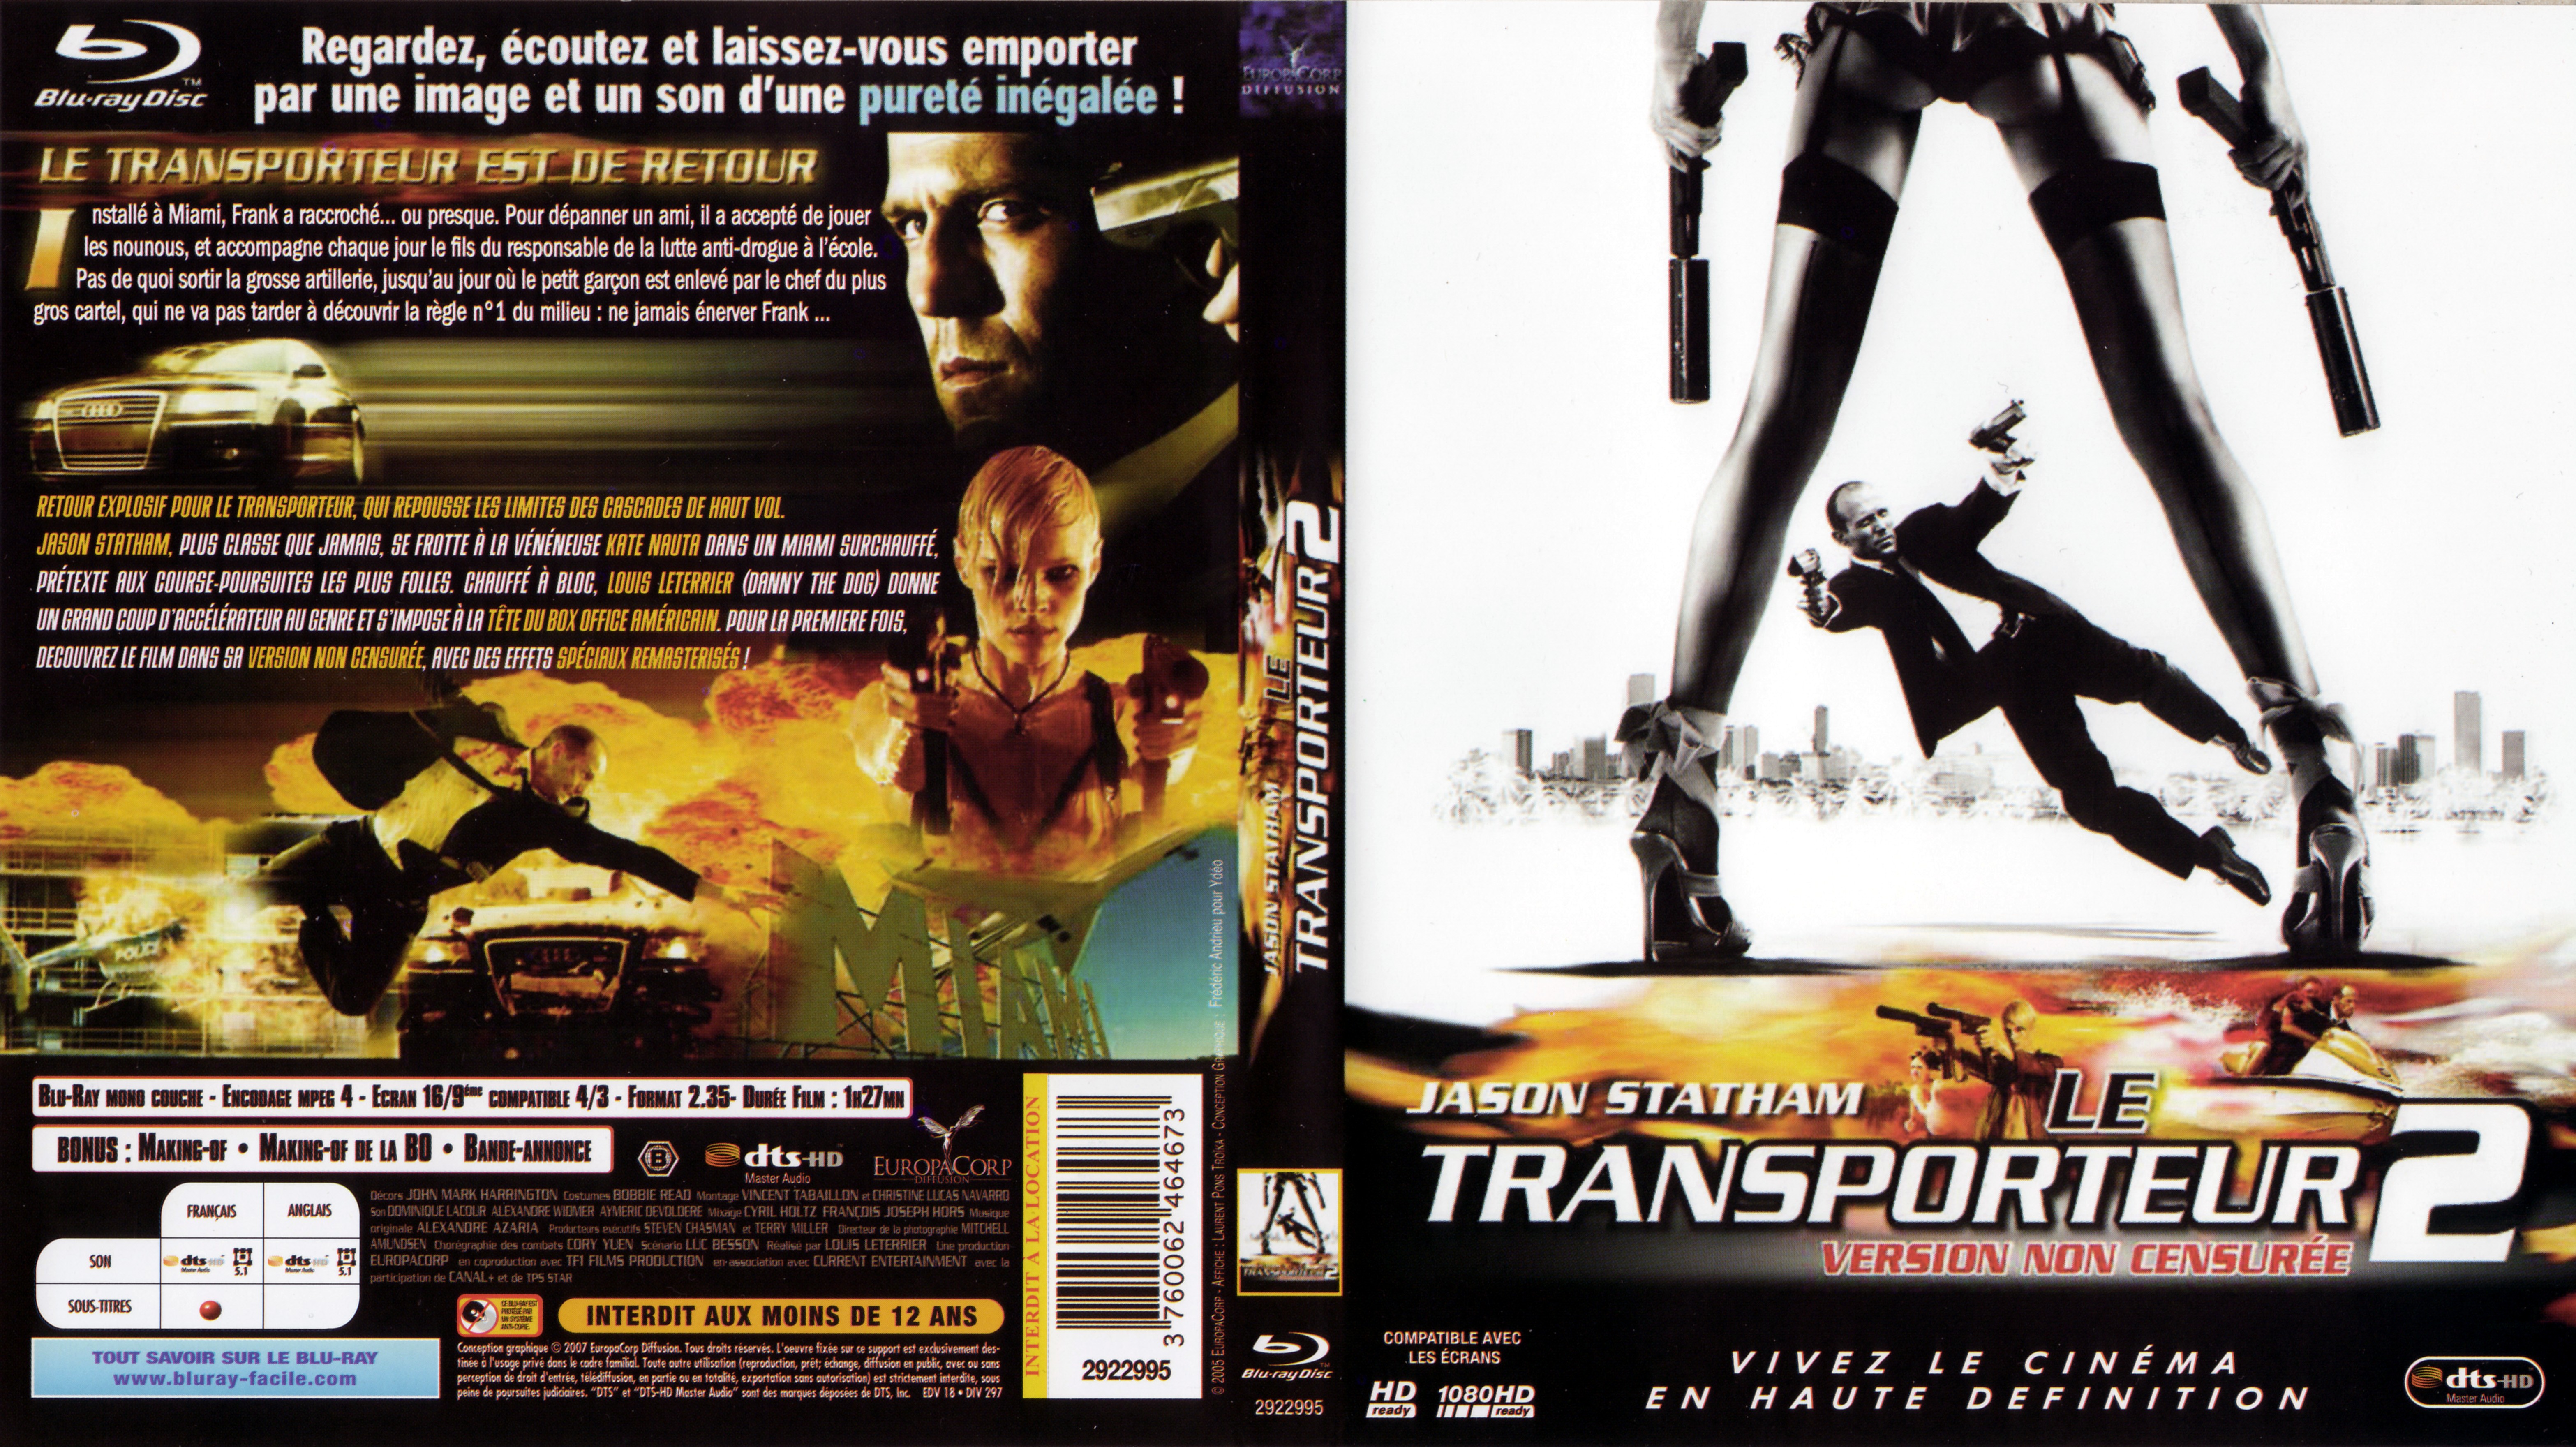 Jaquette DVD Le transporteur 2 (BLU-RAY) v2